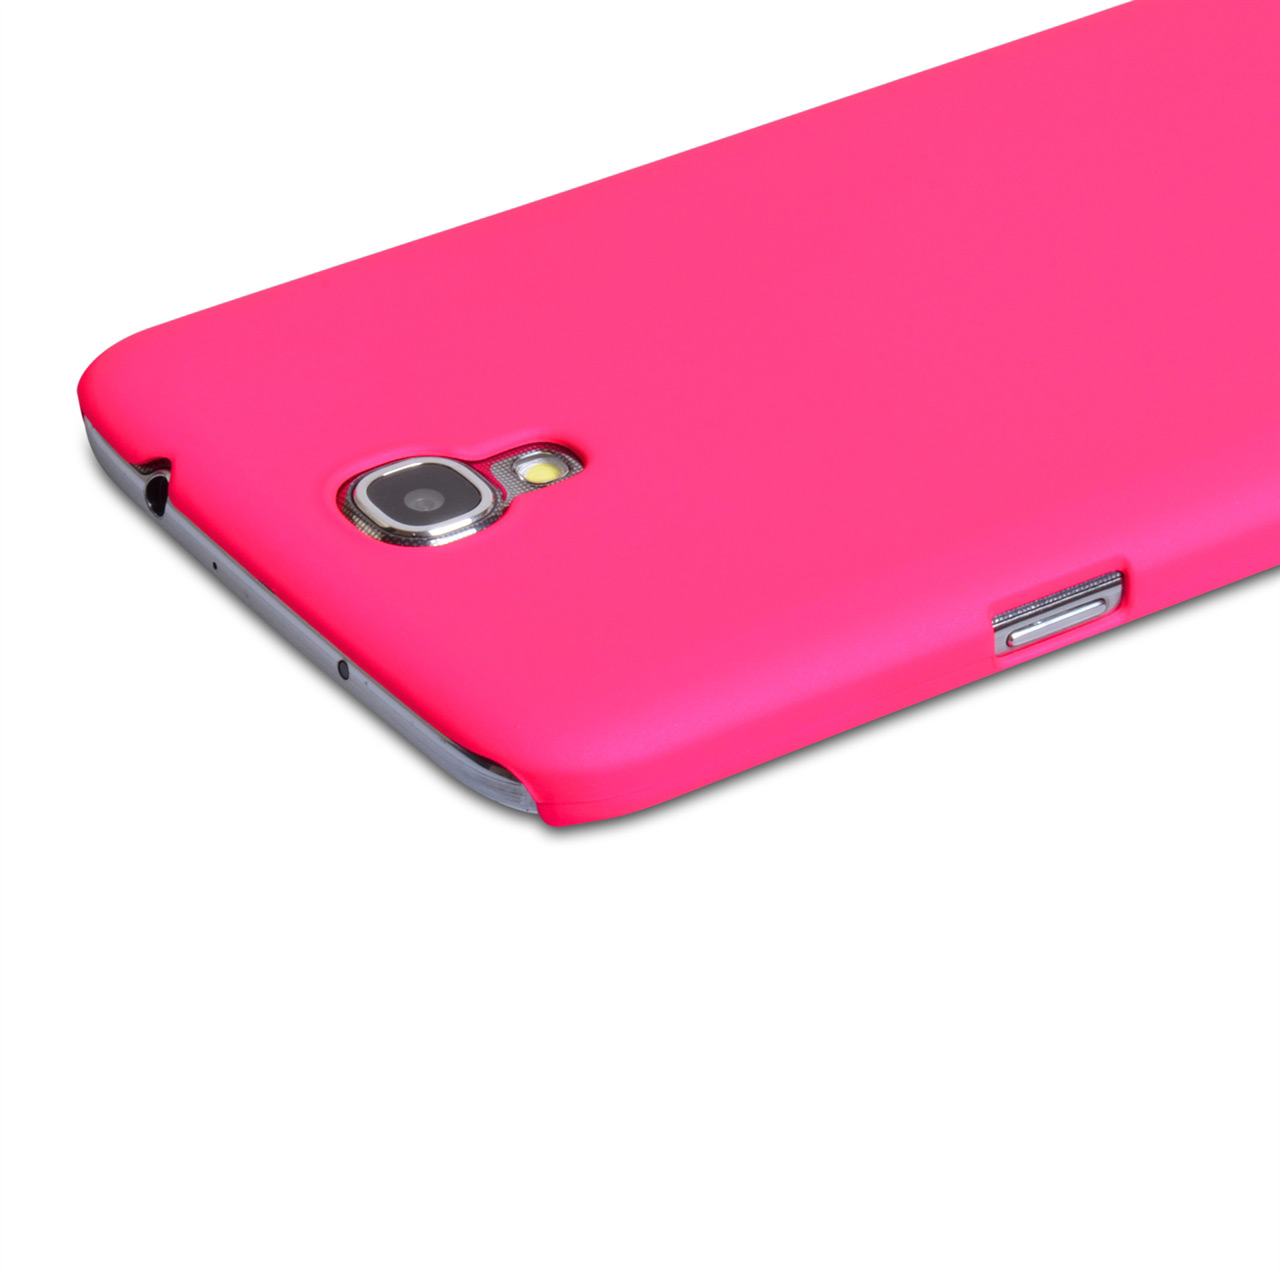 YouSave Samsung Galaxy Mega 6.3 Hard Hybrid Case - Hot Pink